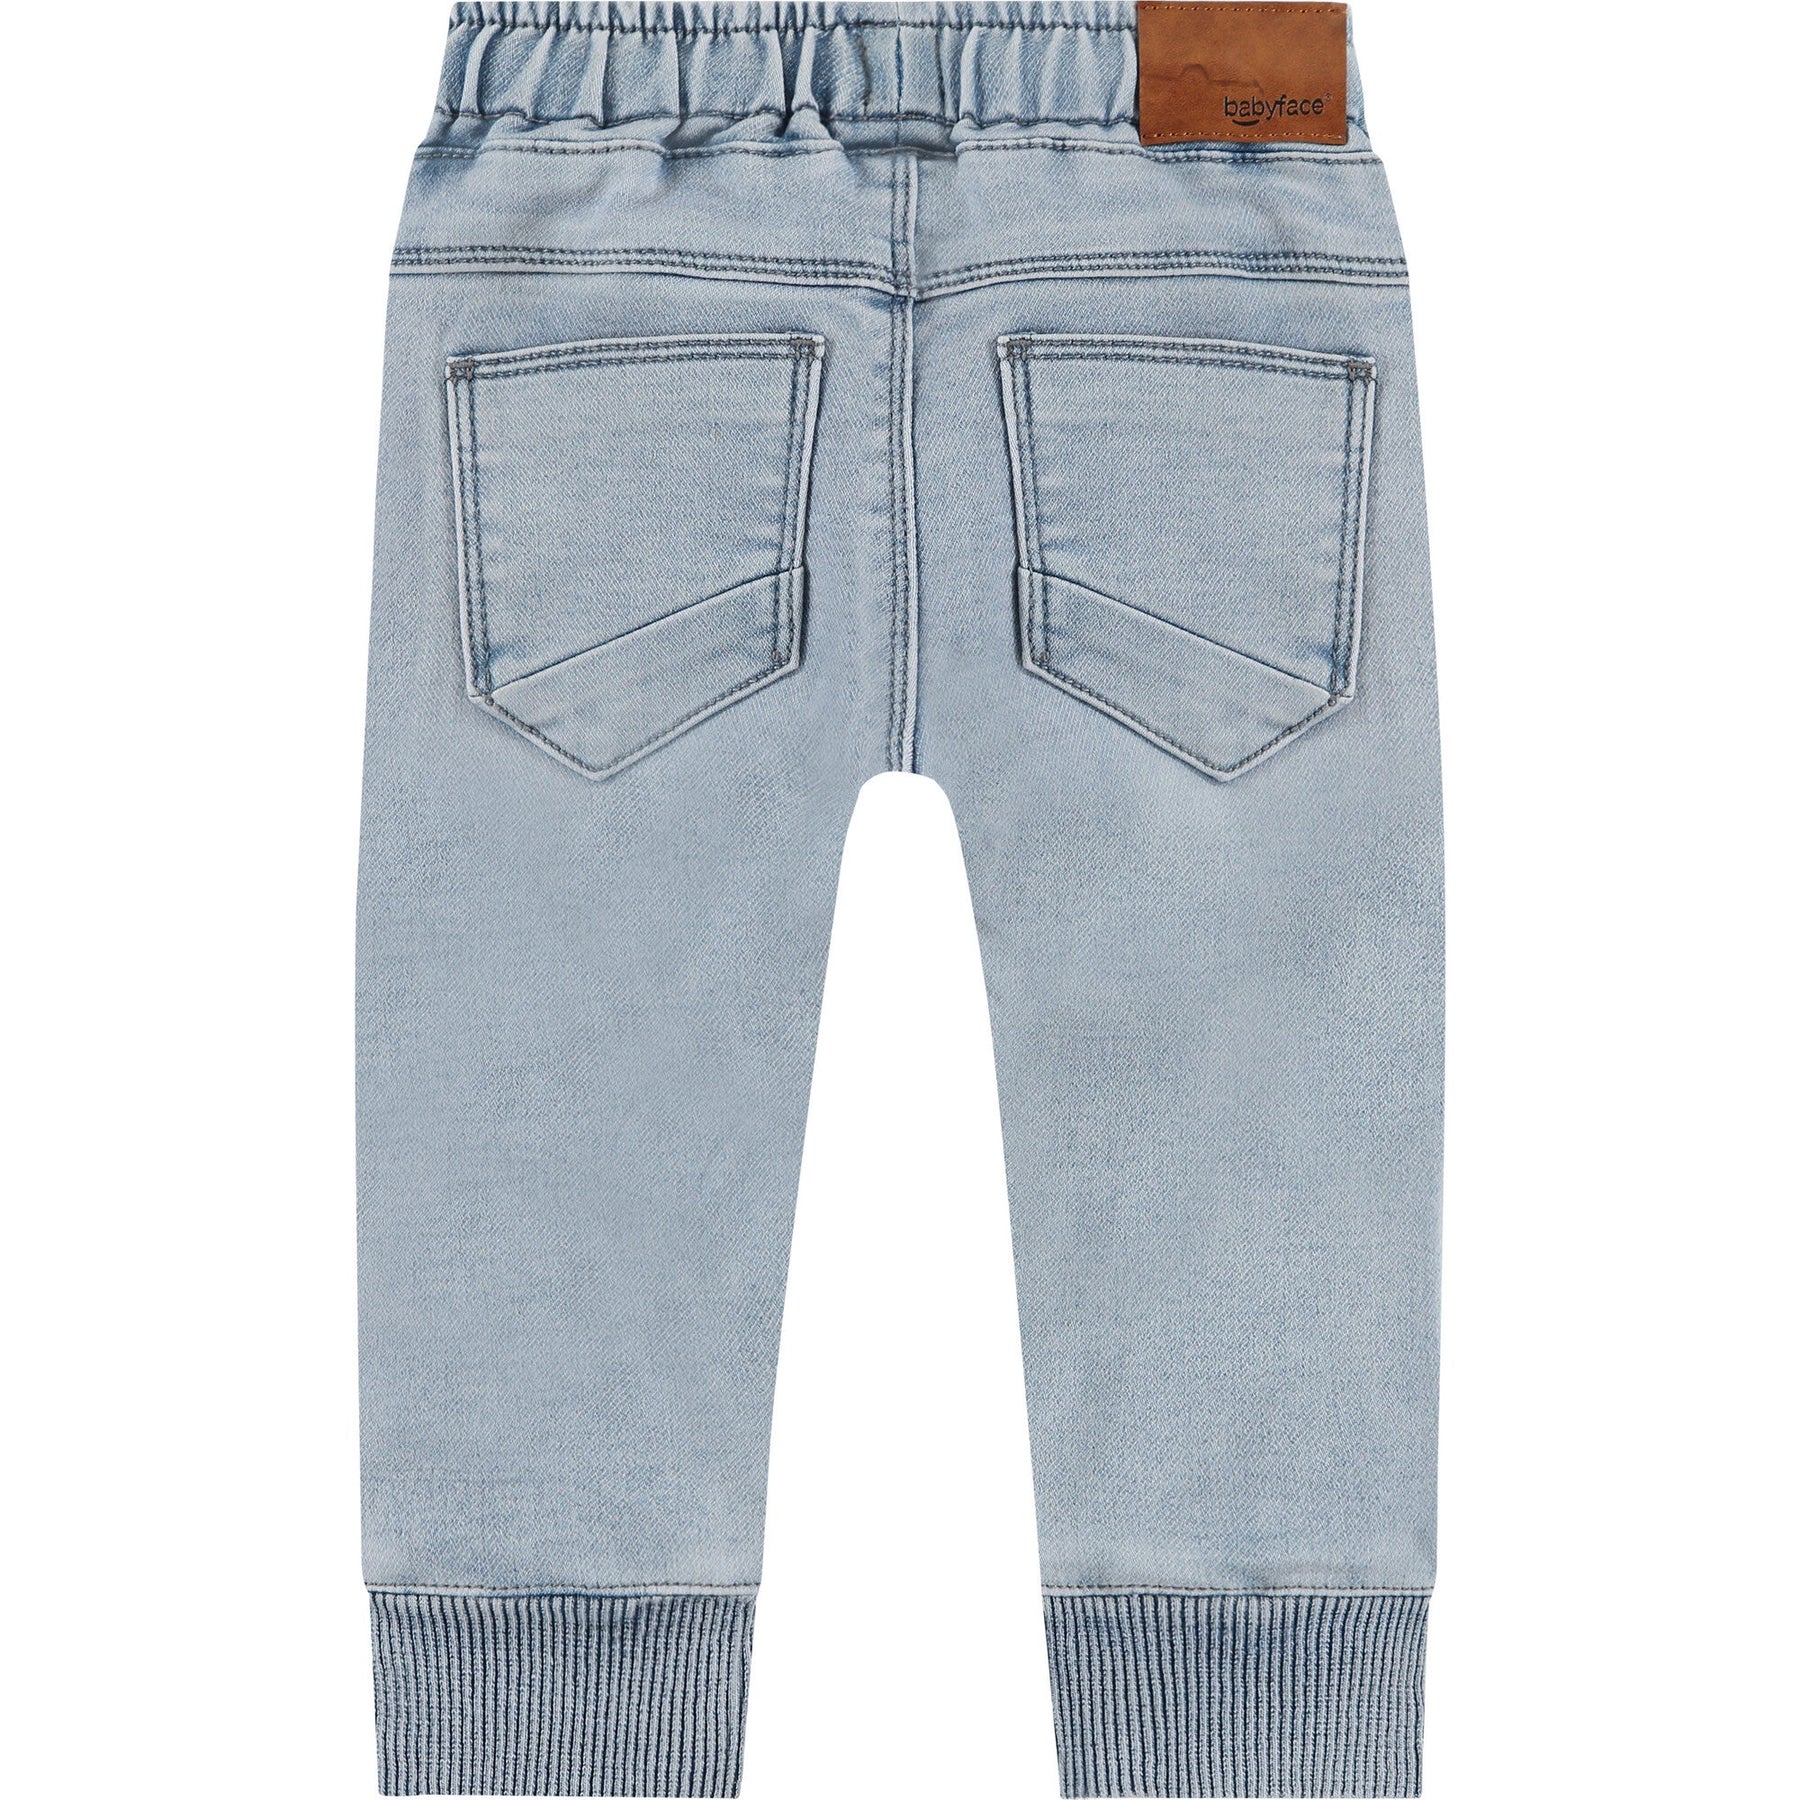 BABYFACE Jogger Style Cinched Waist Cuffed Jeans/Blue Denim